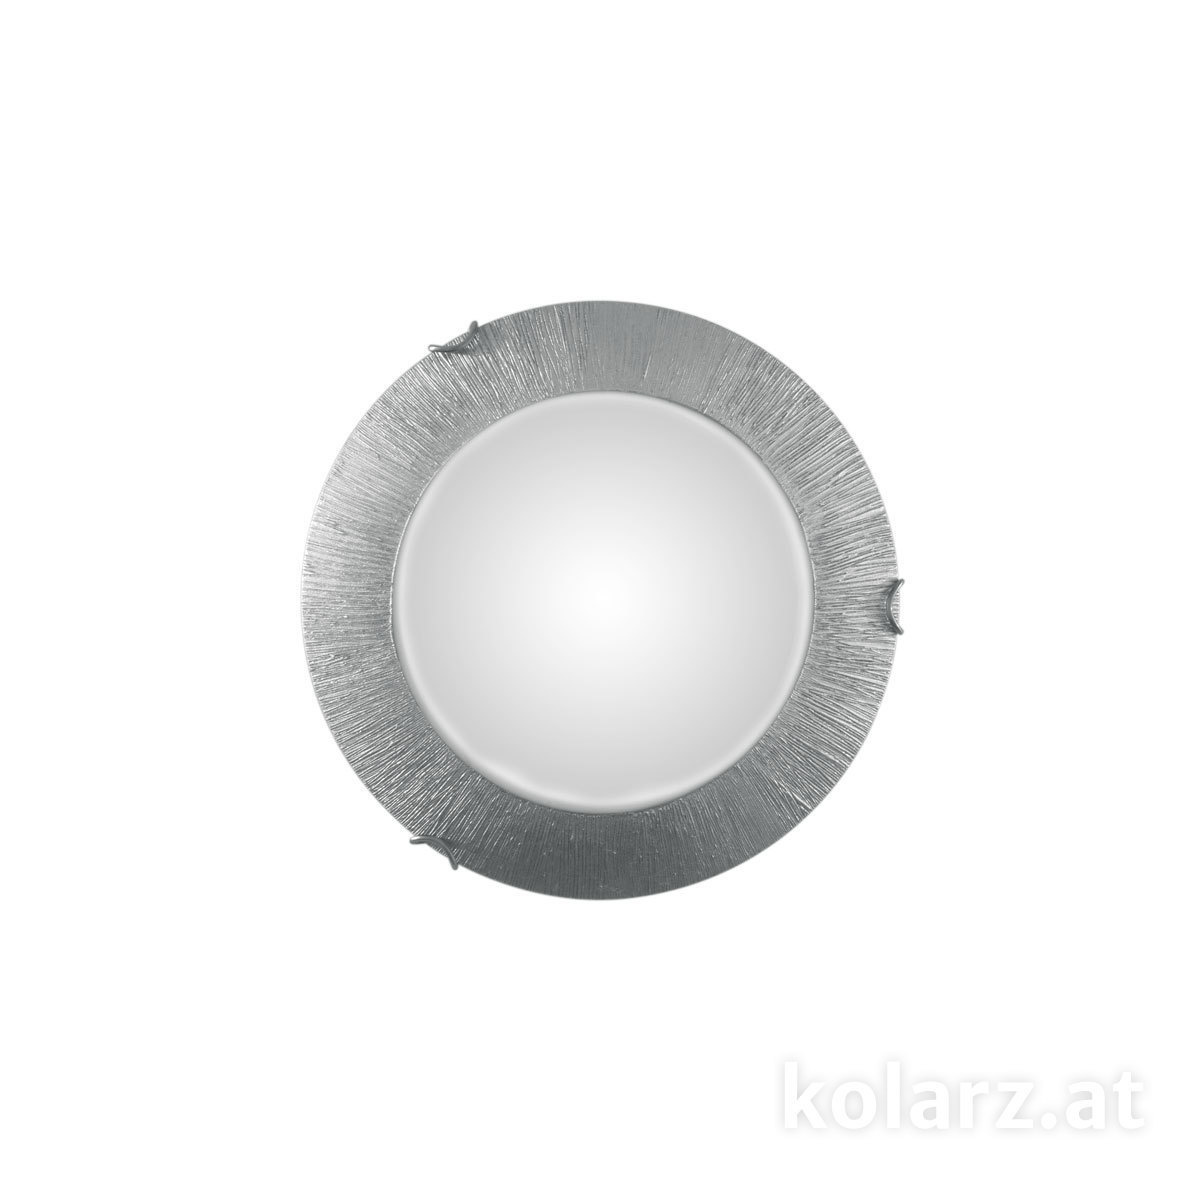 KOLARZ Leuchten Sonderangebote - Sale bei Deckenleuchten & Deckenlampen von KOLARZ Leuchten Deckenleuchte MOON LED 30 cm A1306.11LED.5.SunAg